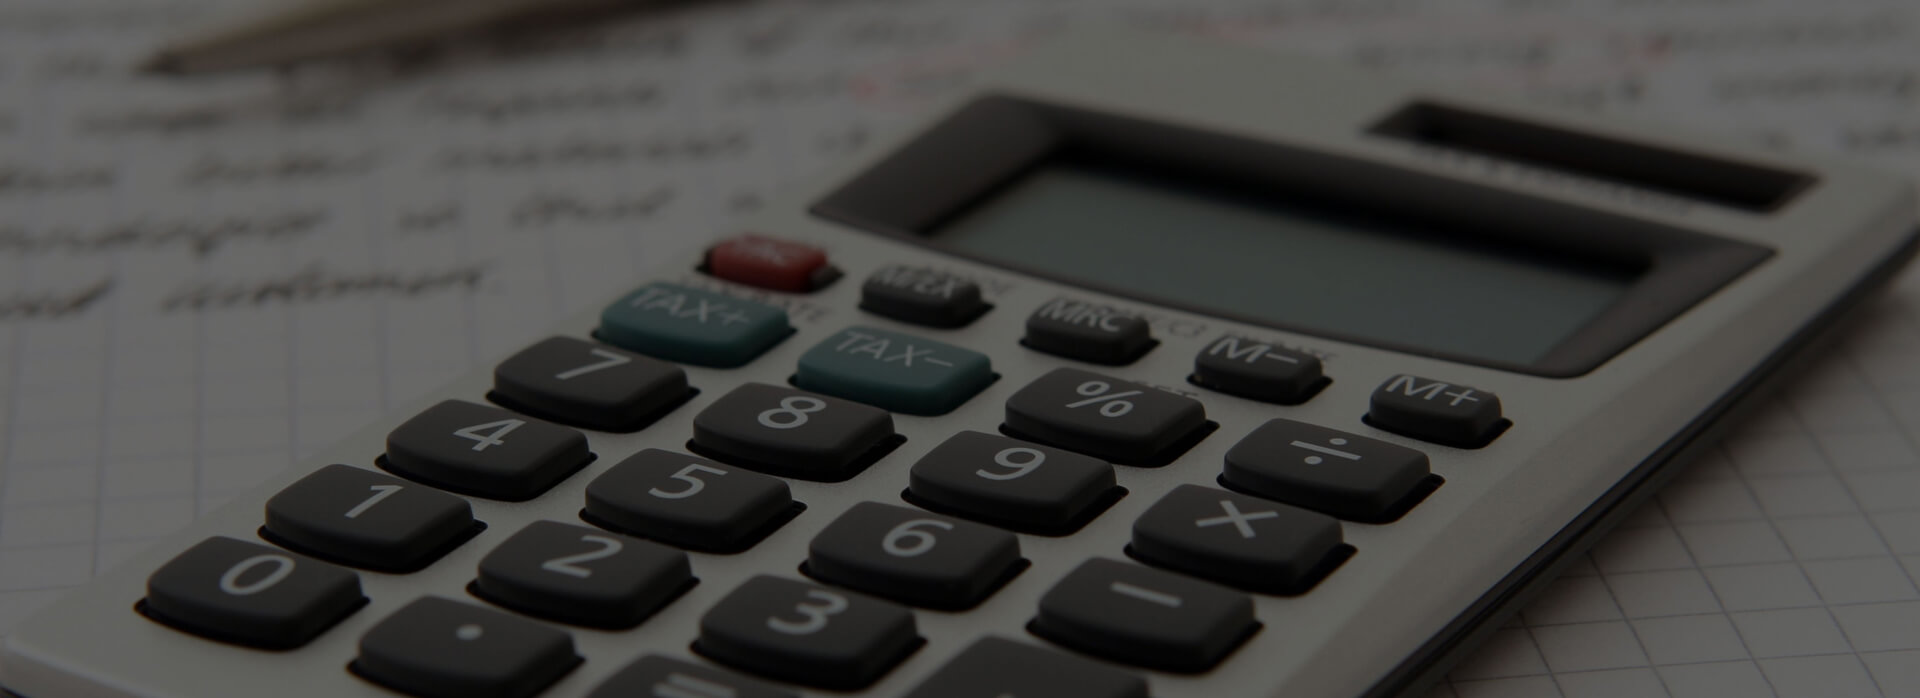 Nhs Tax Refund Calculator